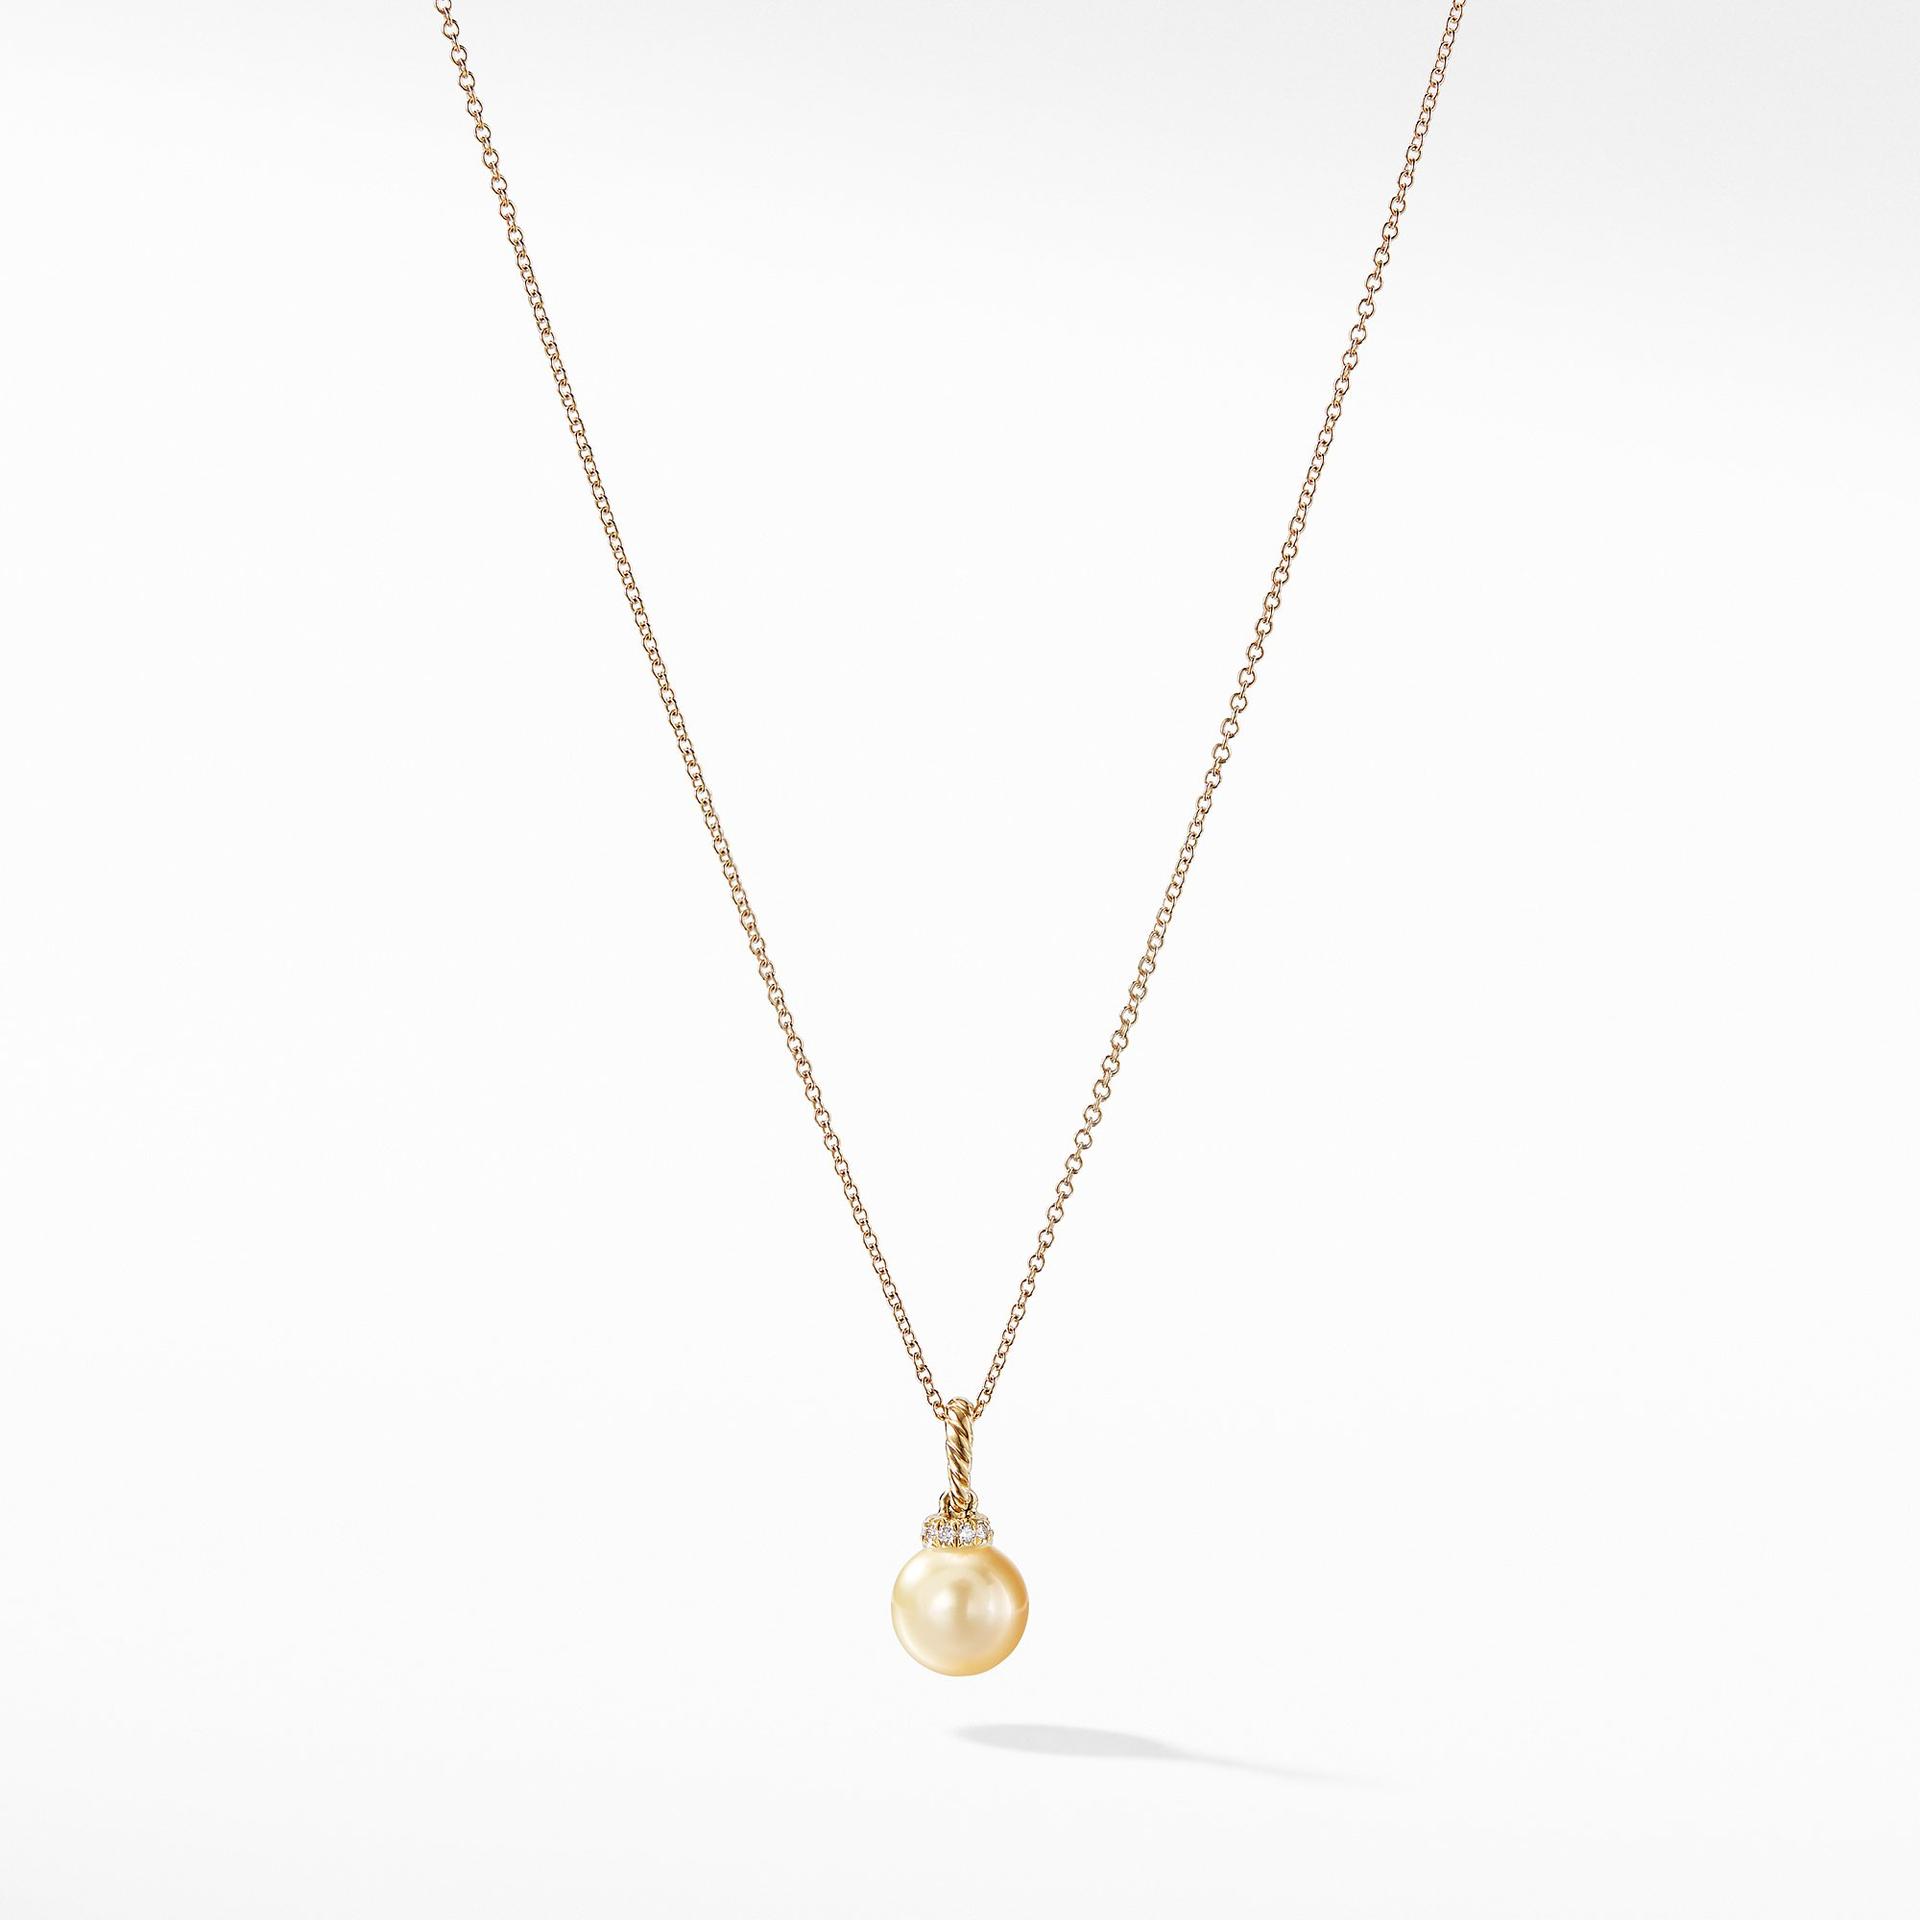 David Yurman Solari Pendant Necklace With Diamonds In 18K Gold 0